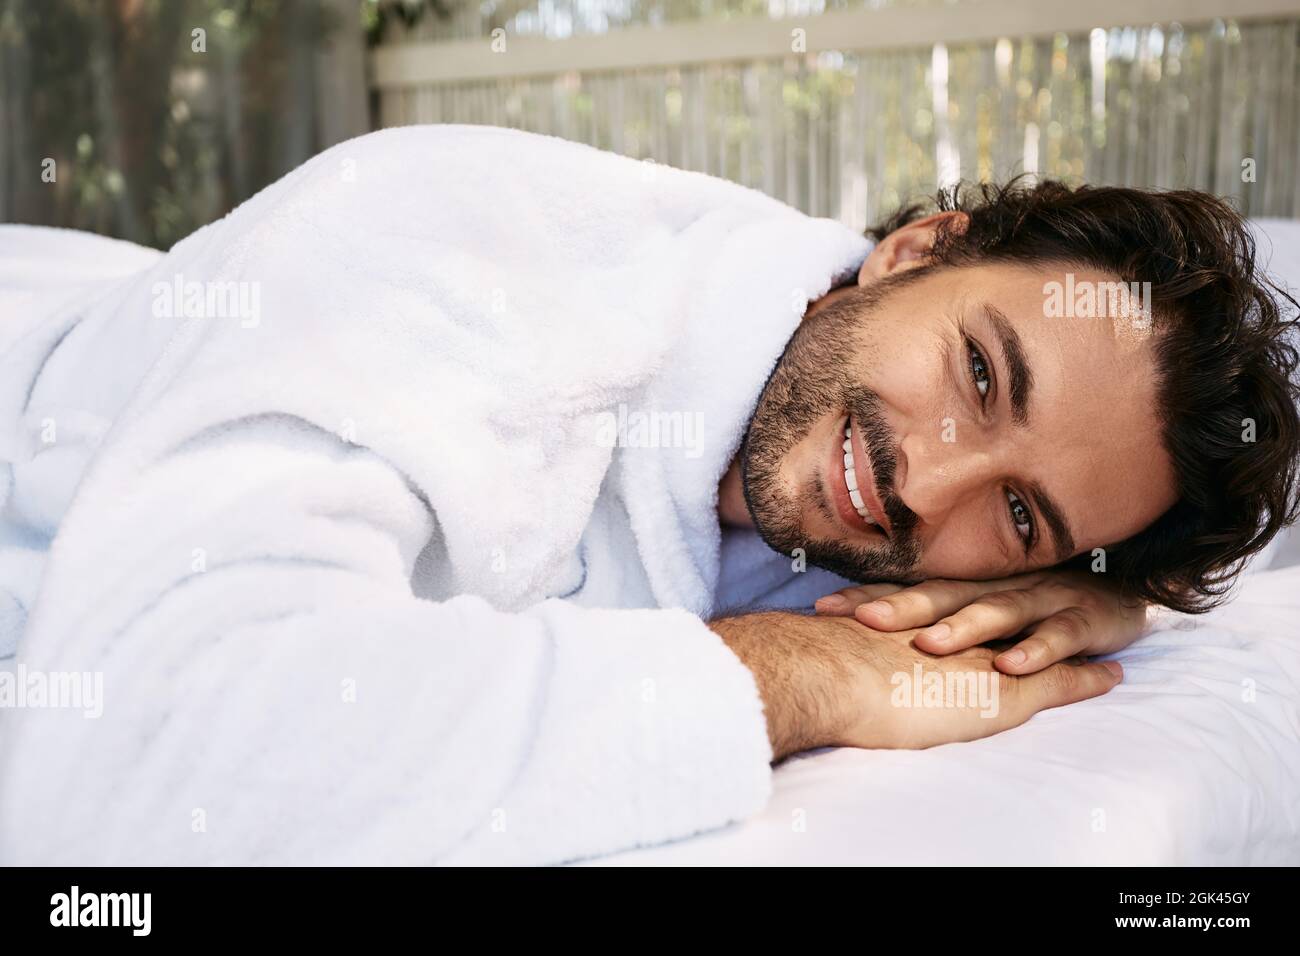 Handsome man wearing a white bathrobe enjoying relaxation at wellness center. Spa for men Stock Photo